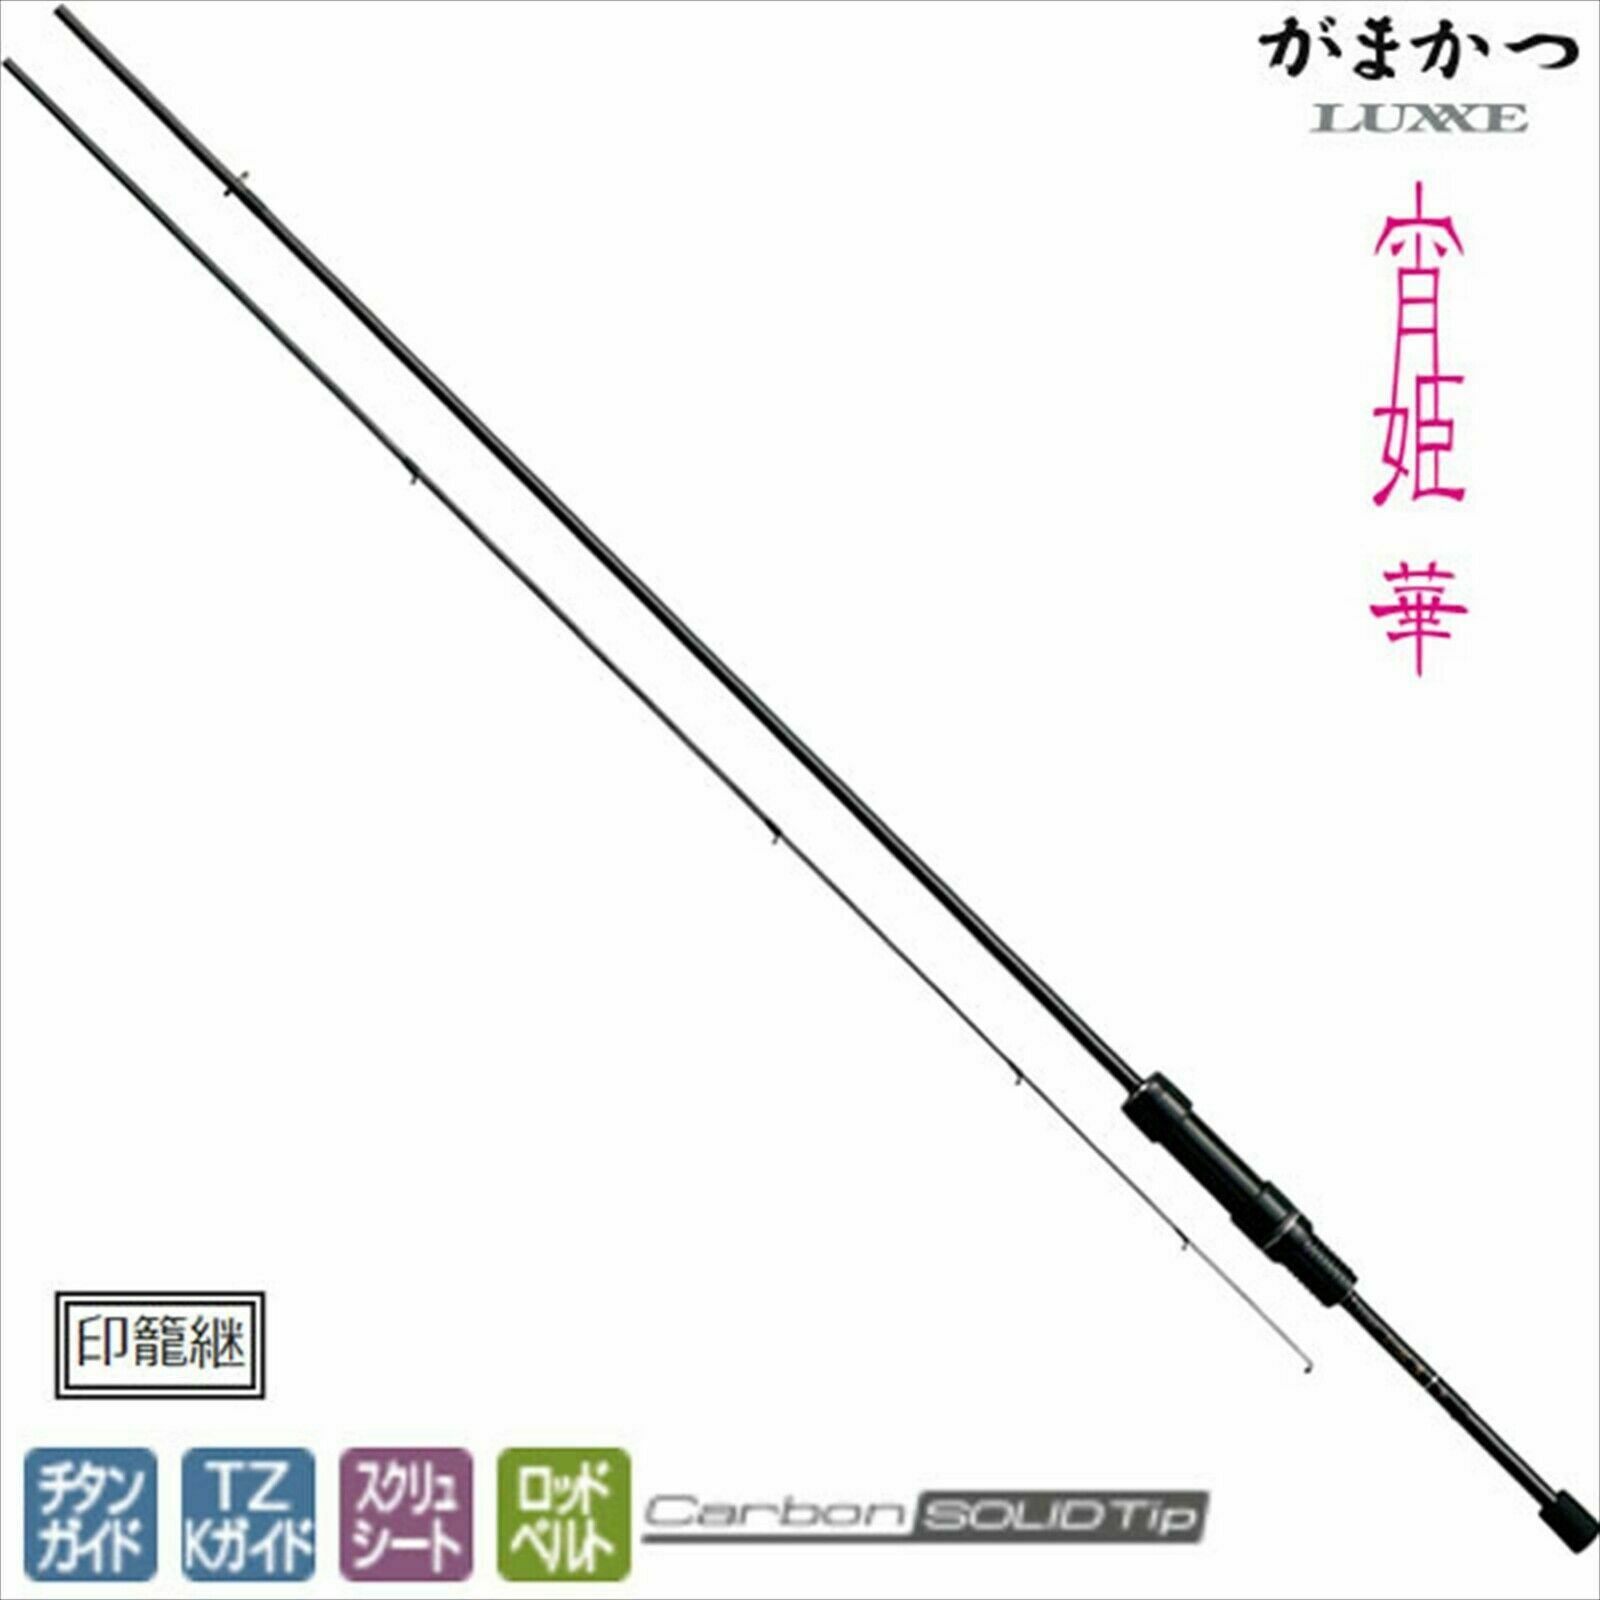 Gamakatsu S77m Solid Rod Luxxe Yoihime Hana 243734 7.7 Stylish Anglers New